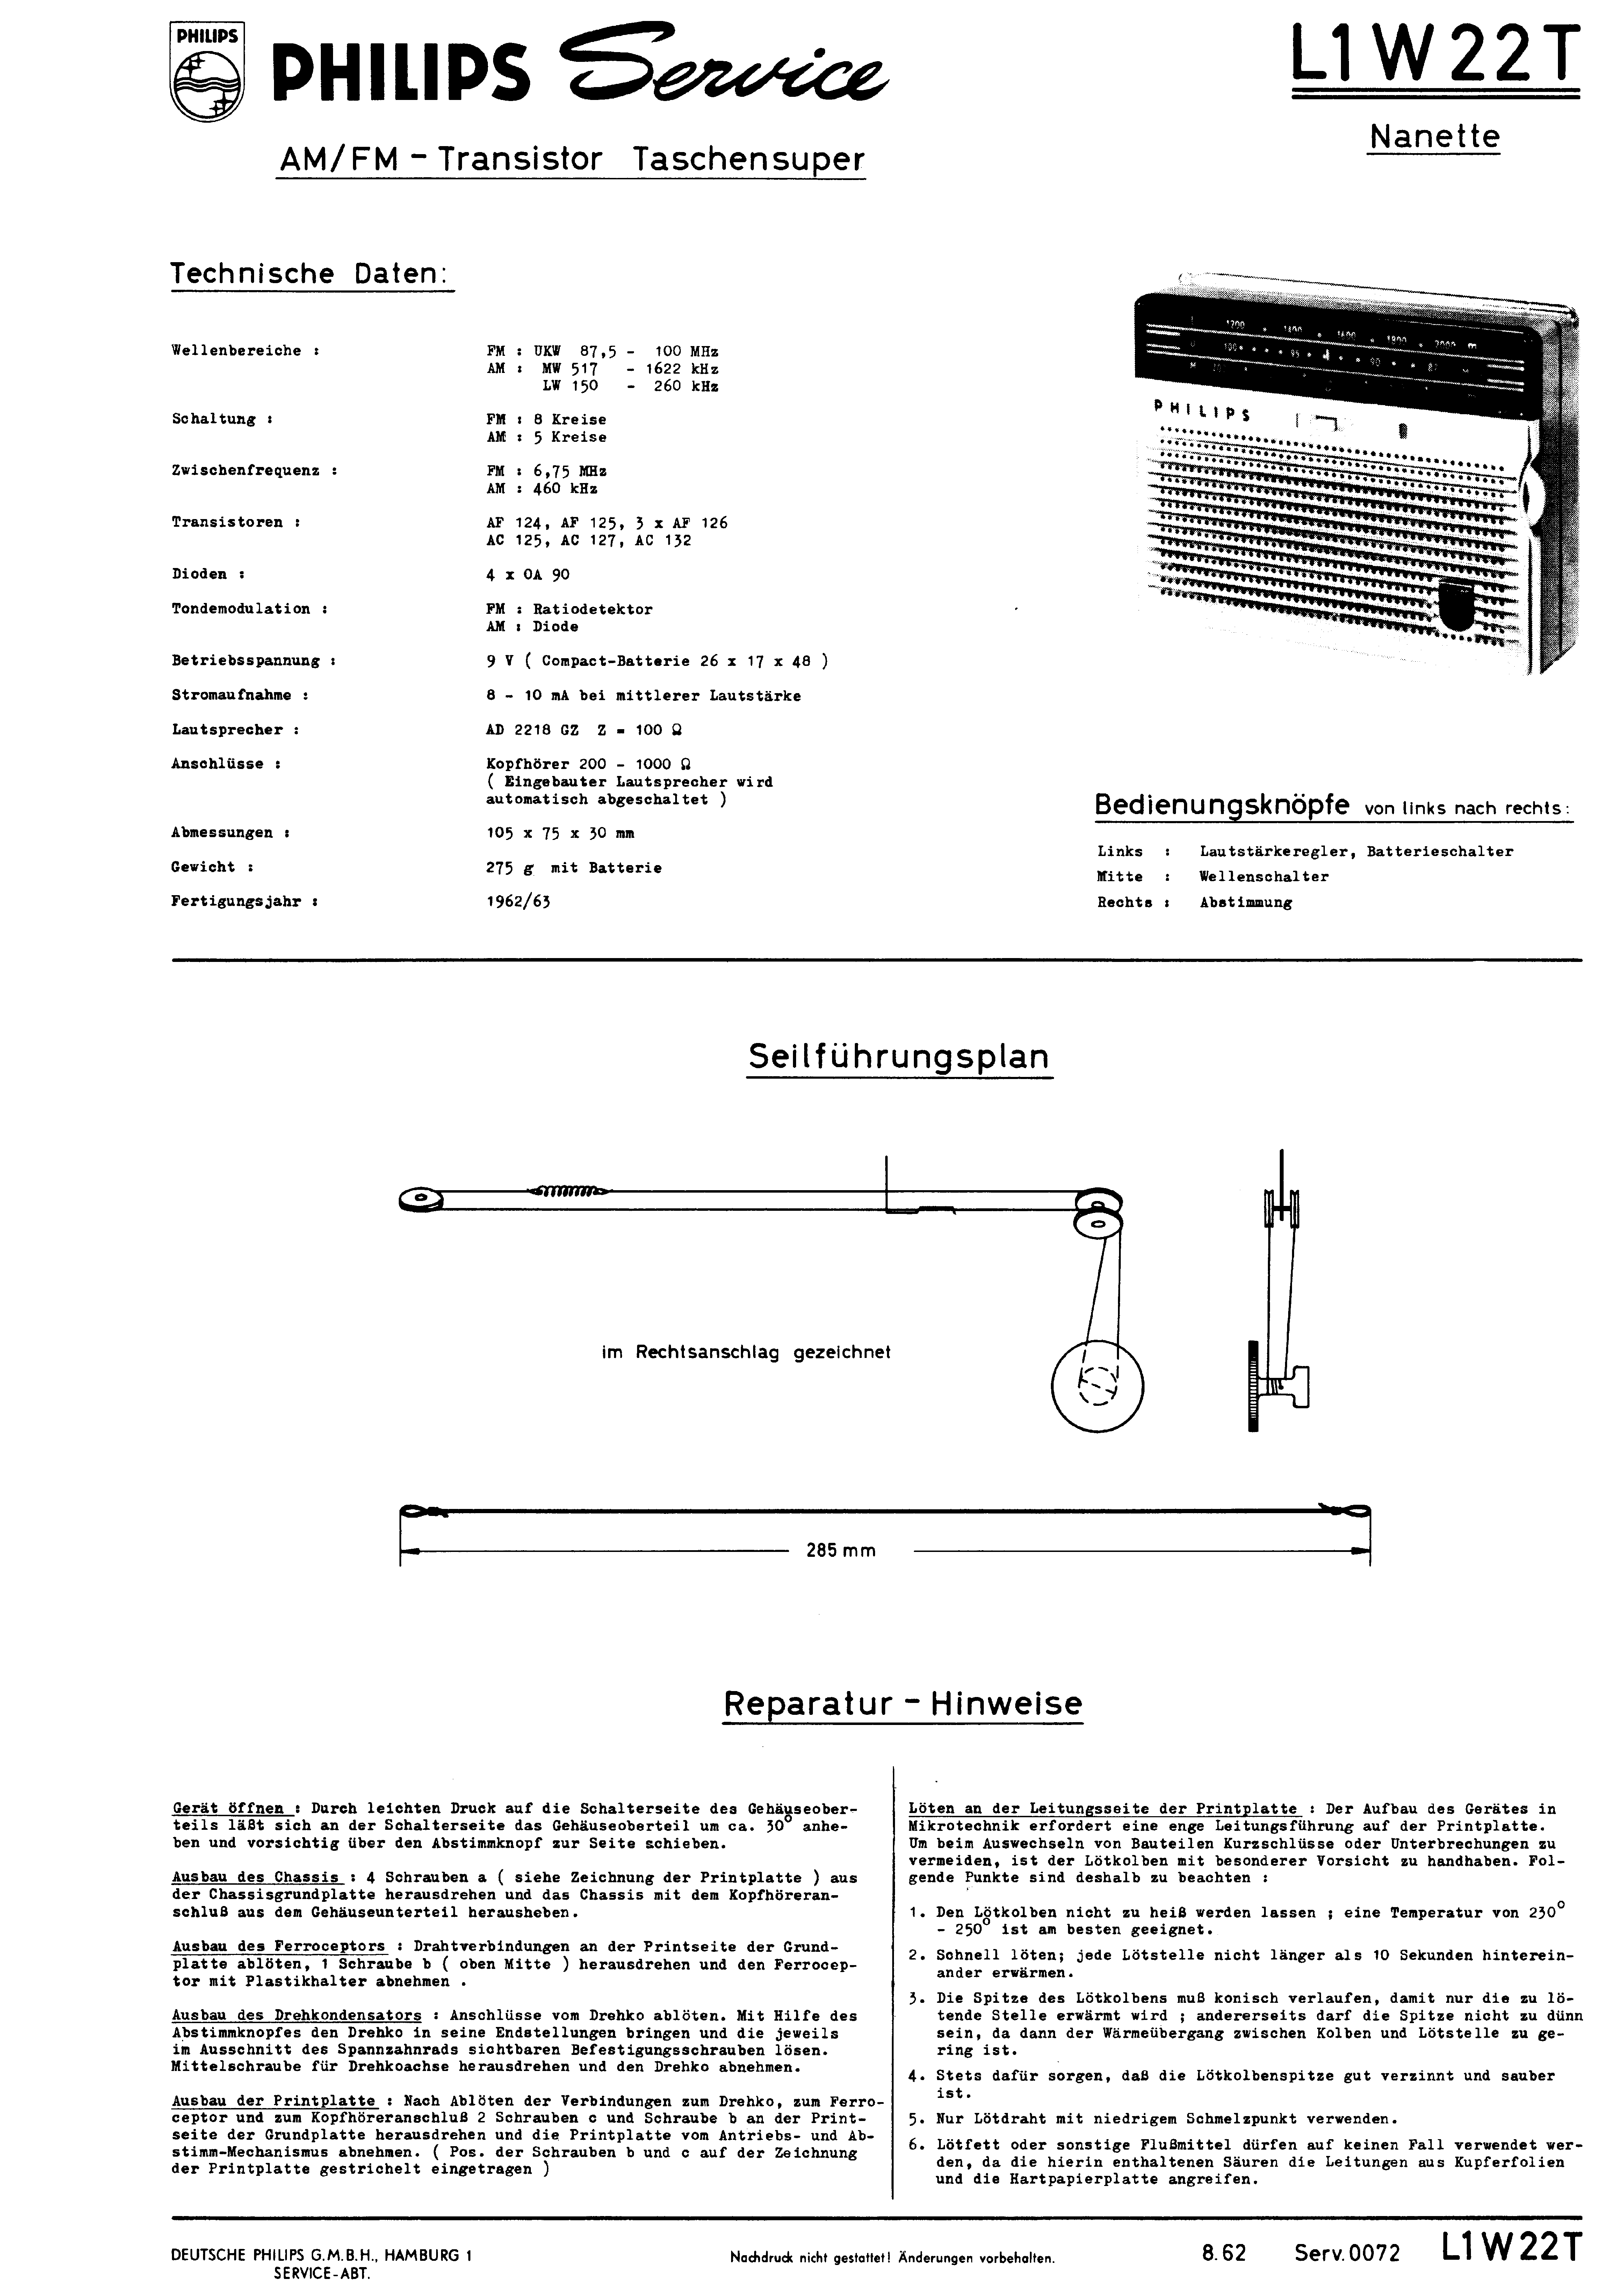 PHILIPS L1W22T NANETTE SM service manual (1st page)